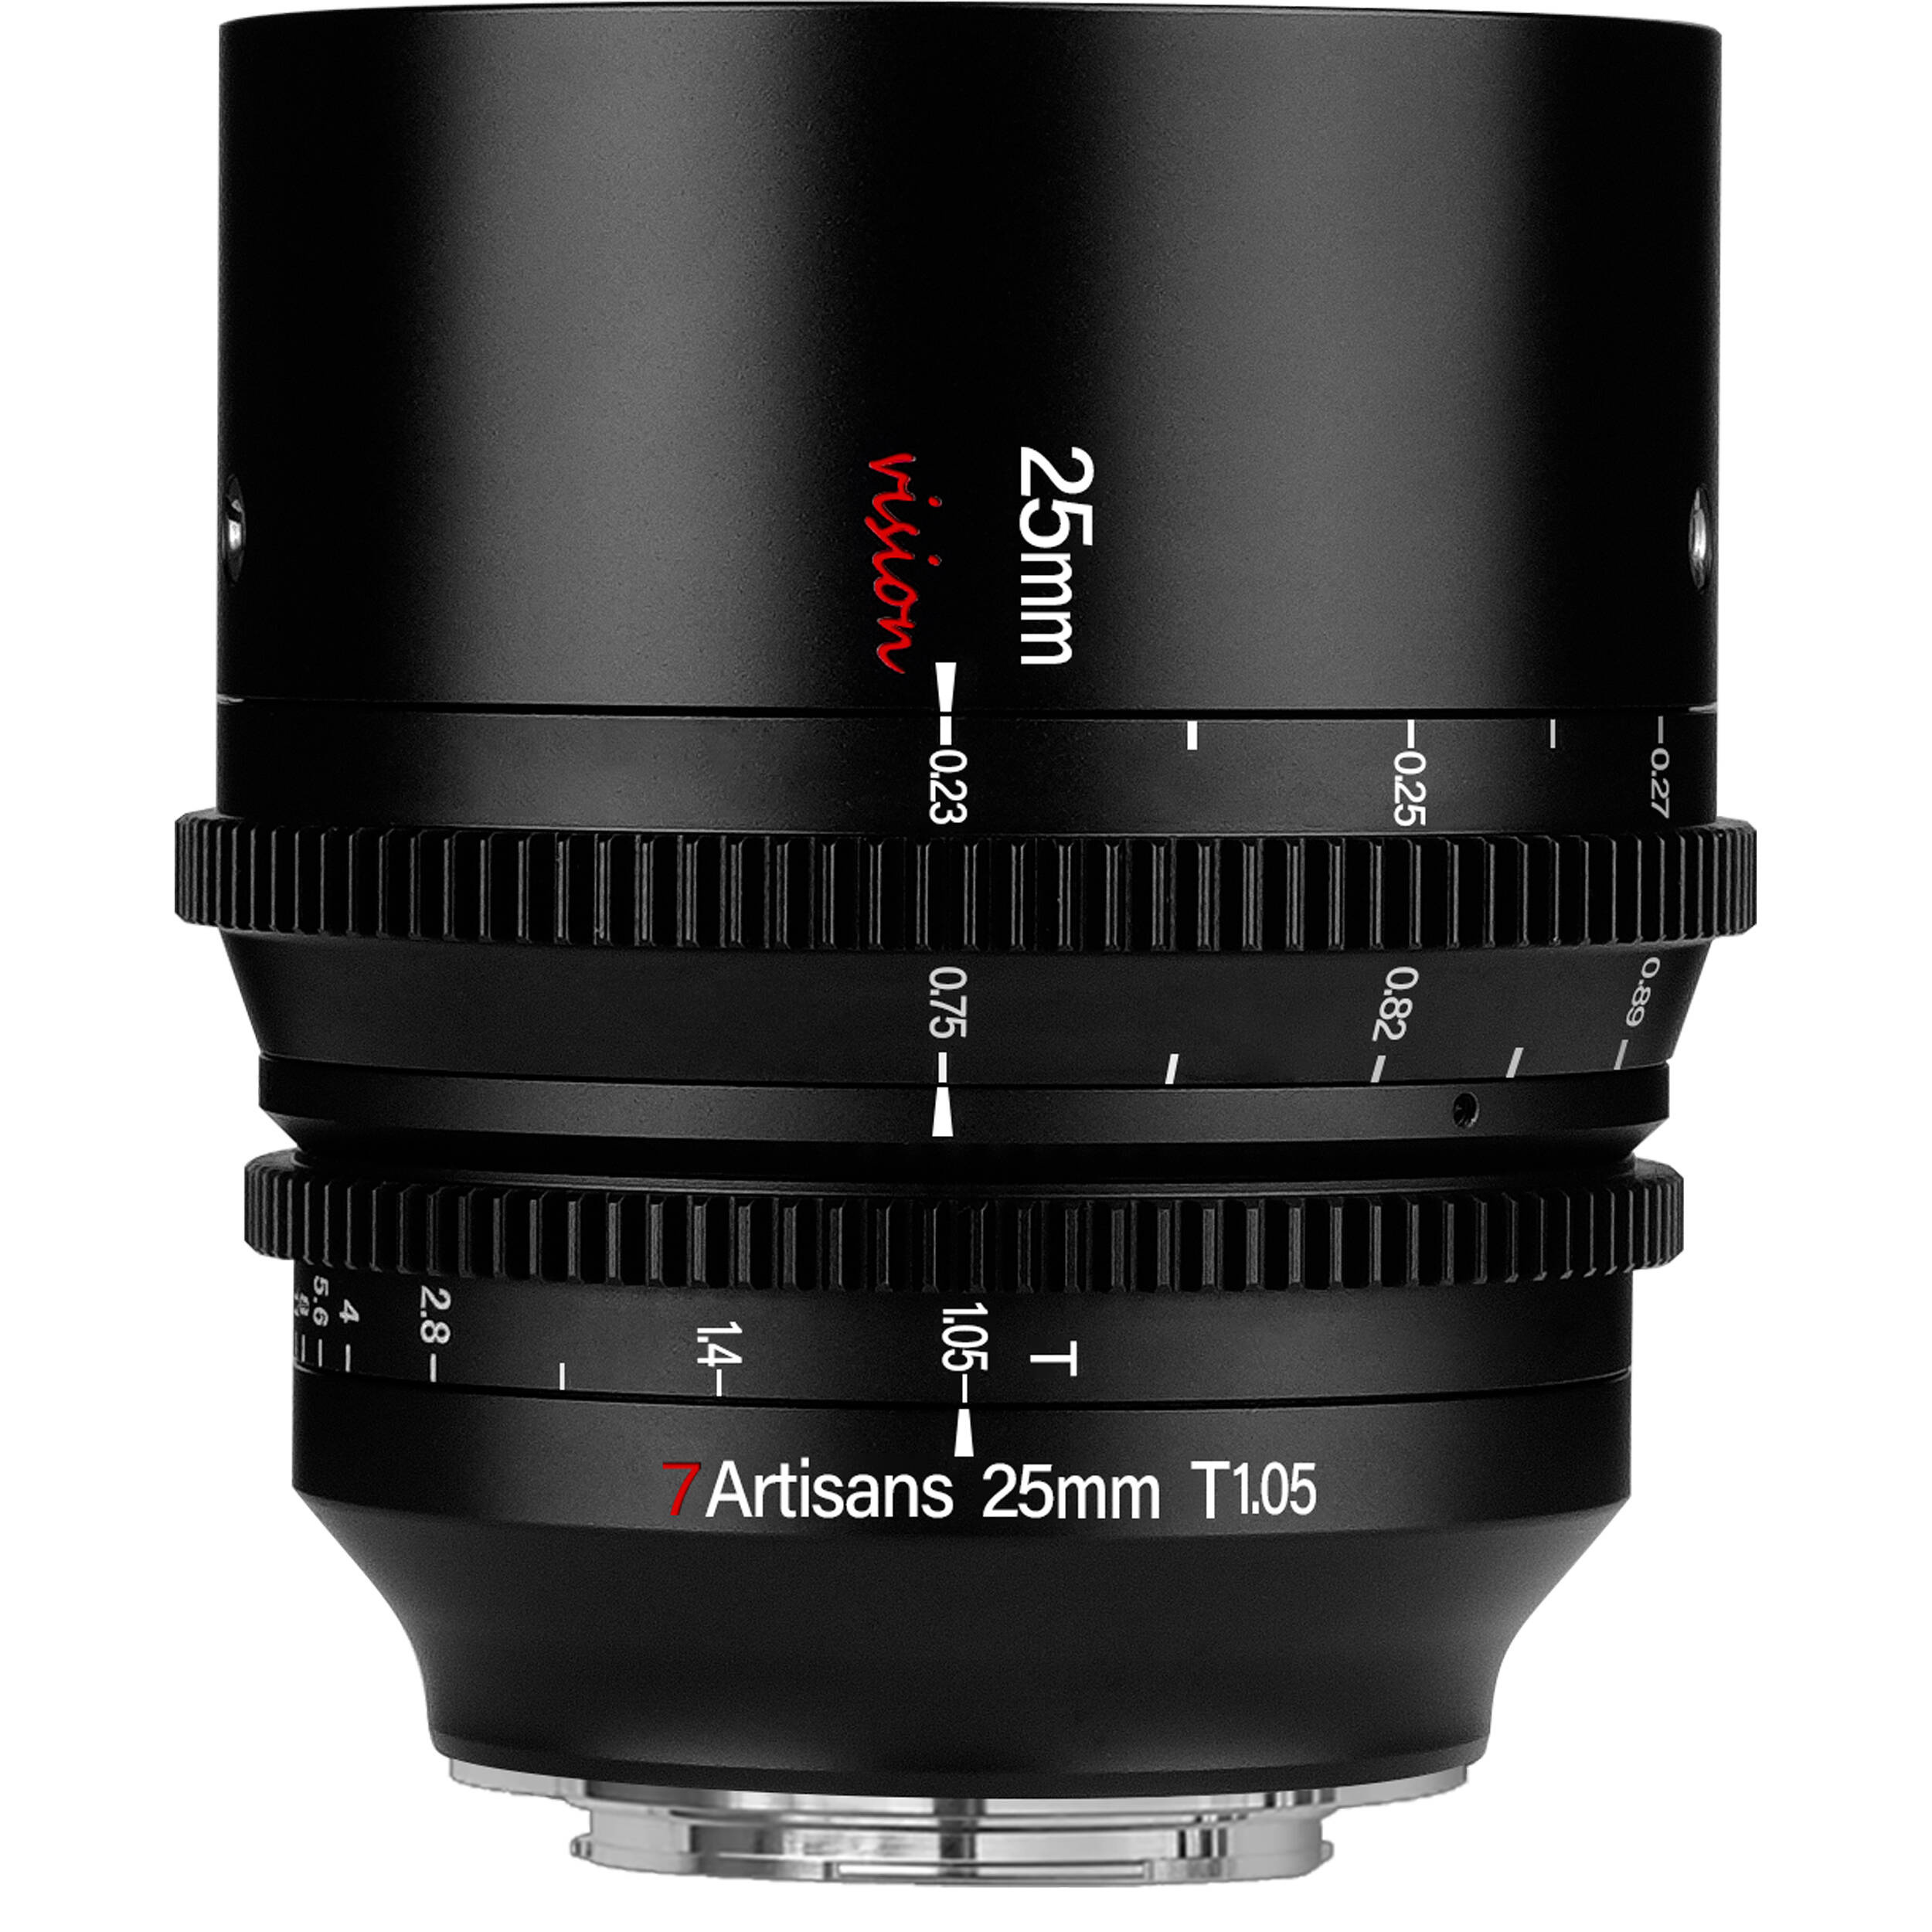 7Artisans 25mm T1.05 Vision Cine Lens (X Mount)